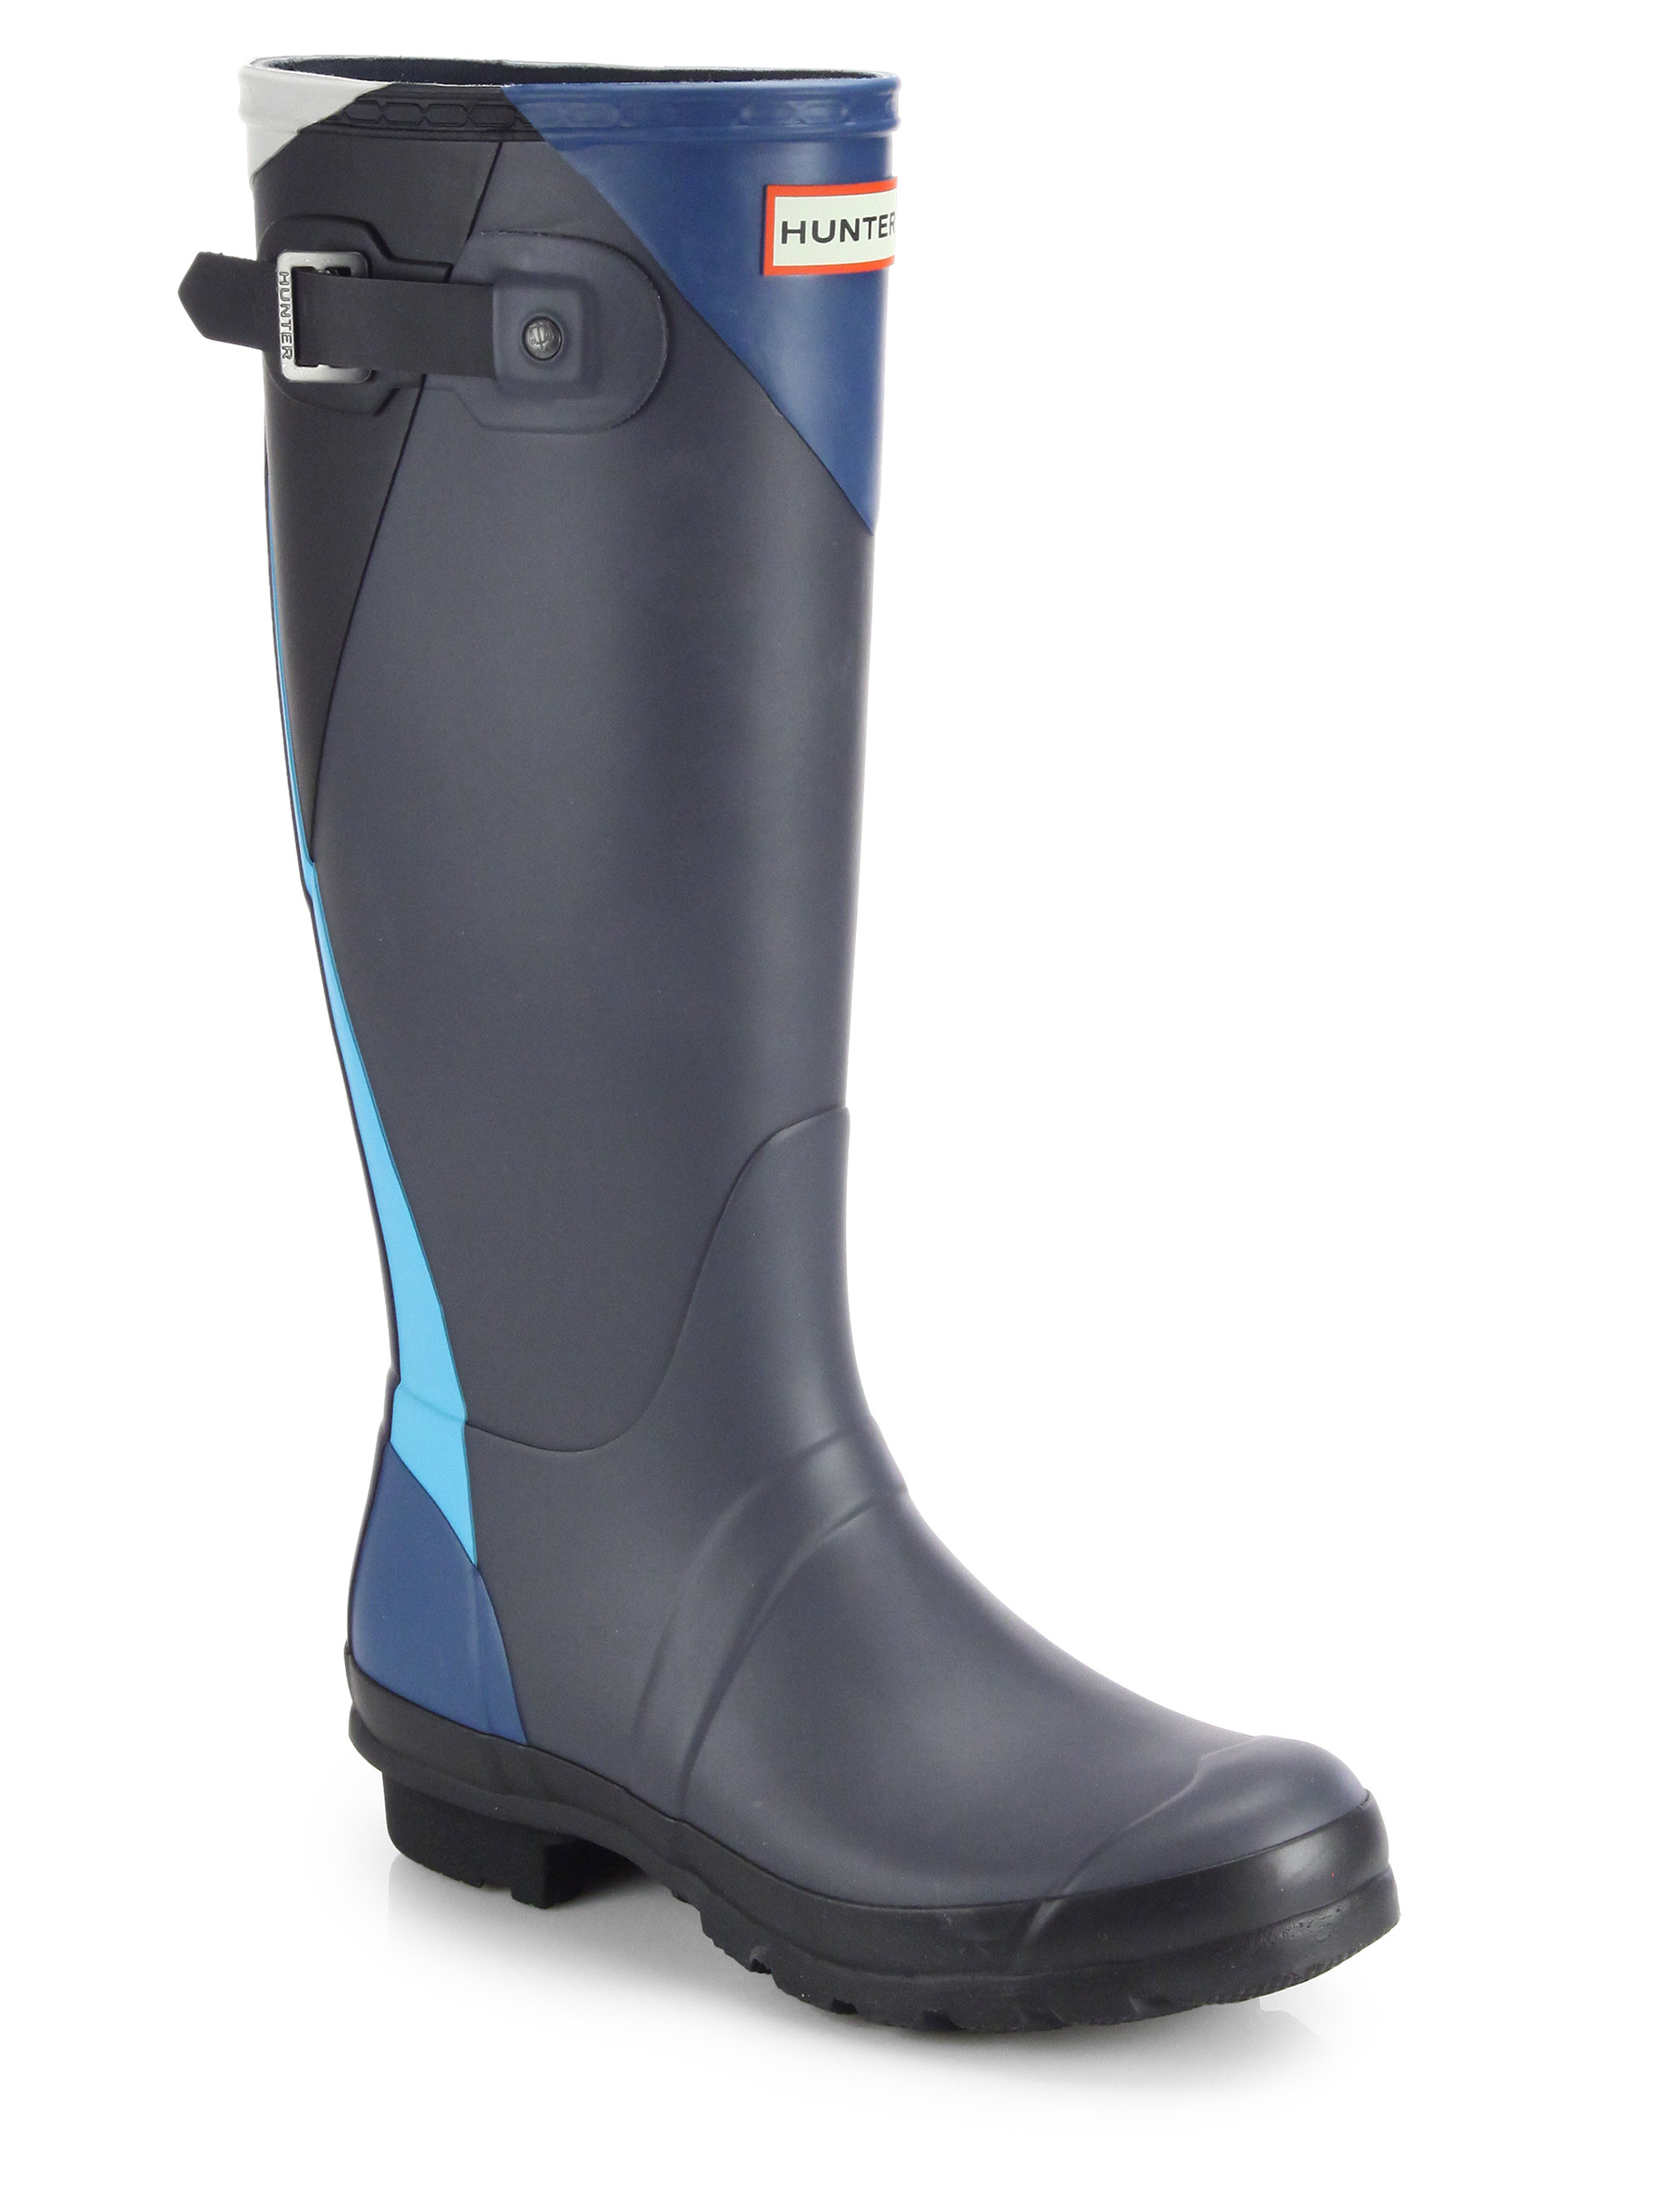 Lyst - Hunter Original Dazzle Rain Boots in Blue